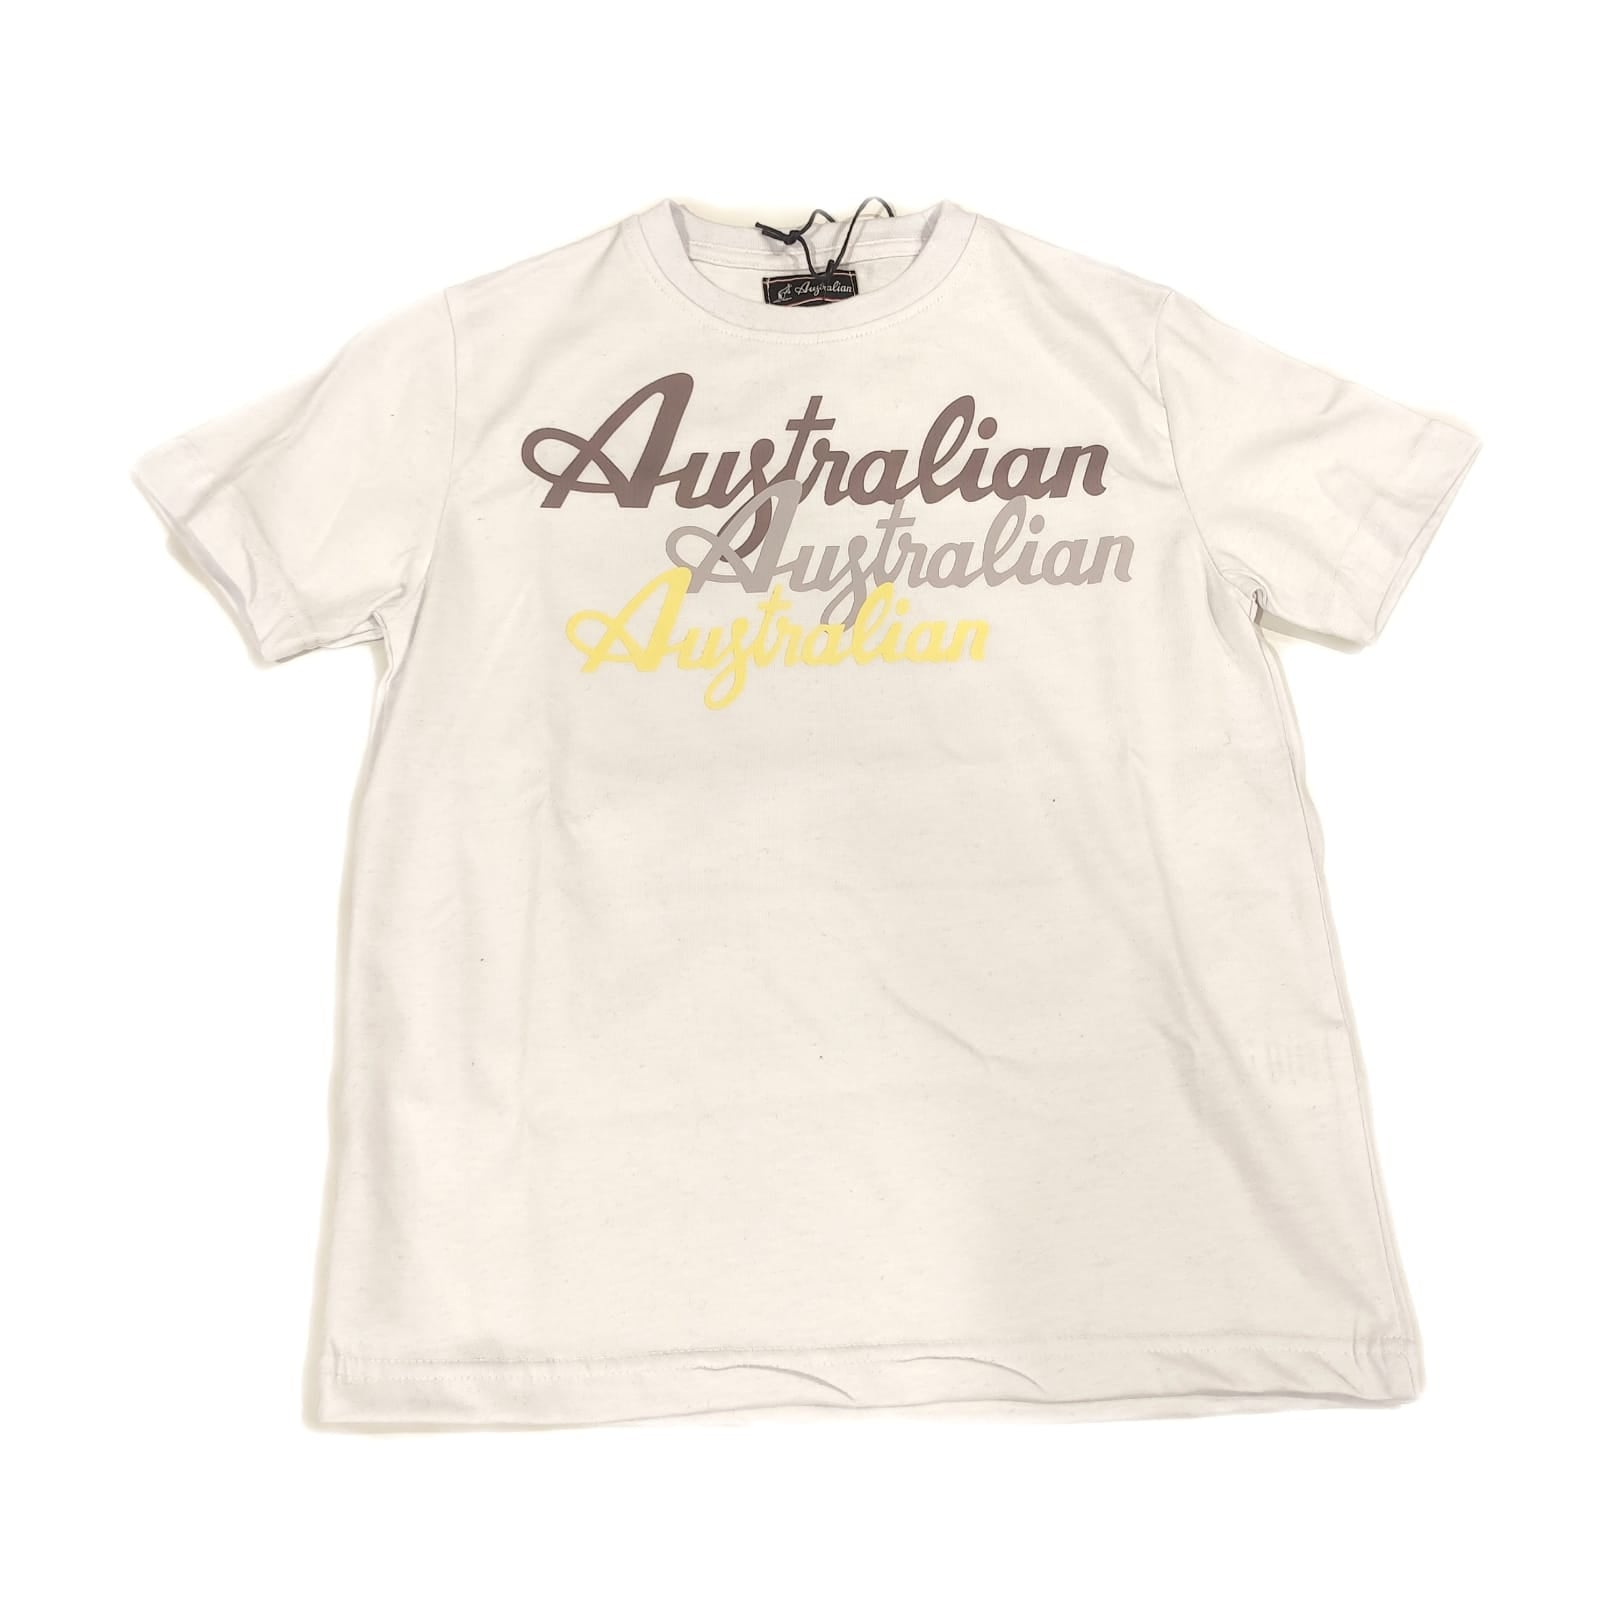 AS0541-010 - T-Shirt e Polo - Australian